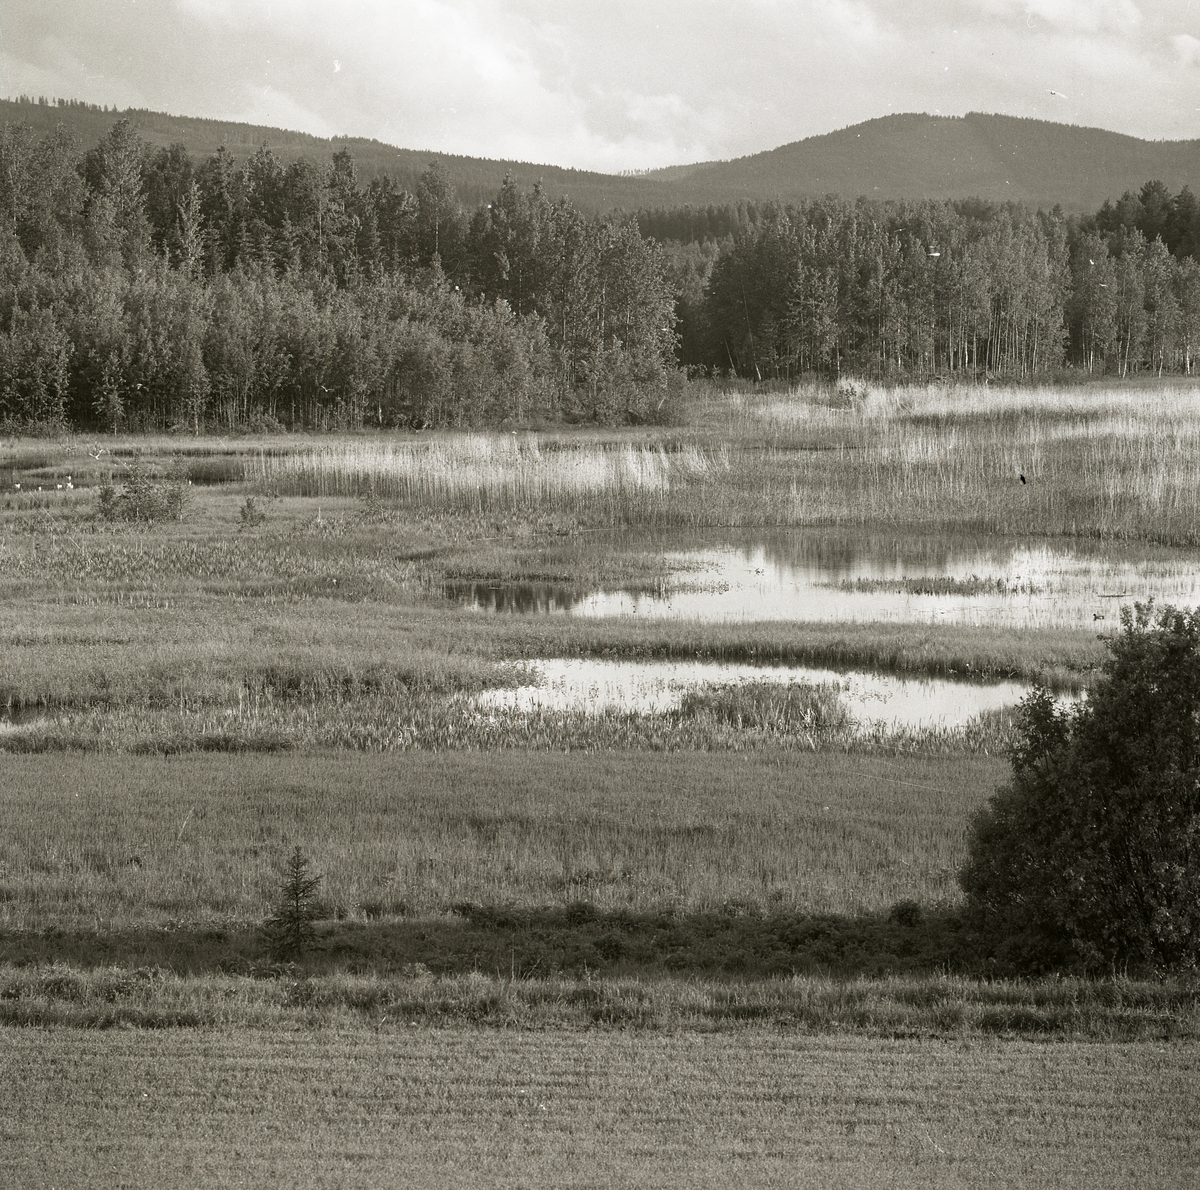 En våtmark med skog och berg i bakgrunden, Ljusdal 1982.